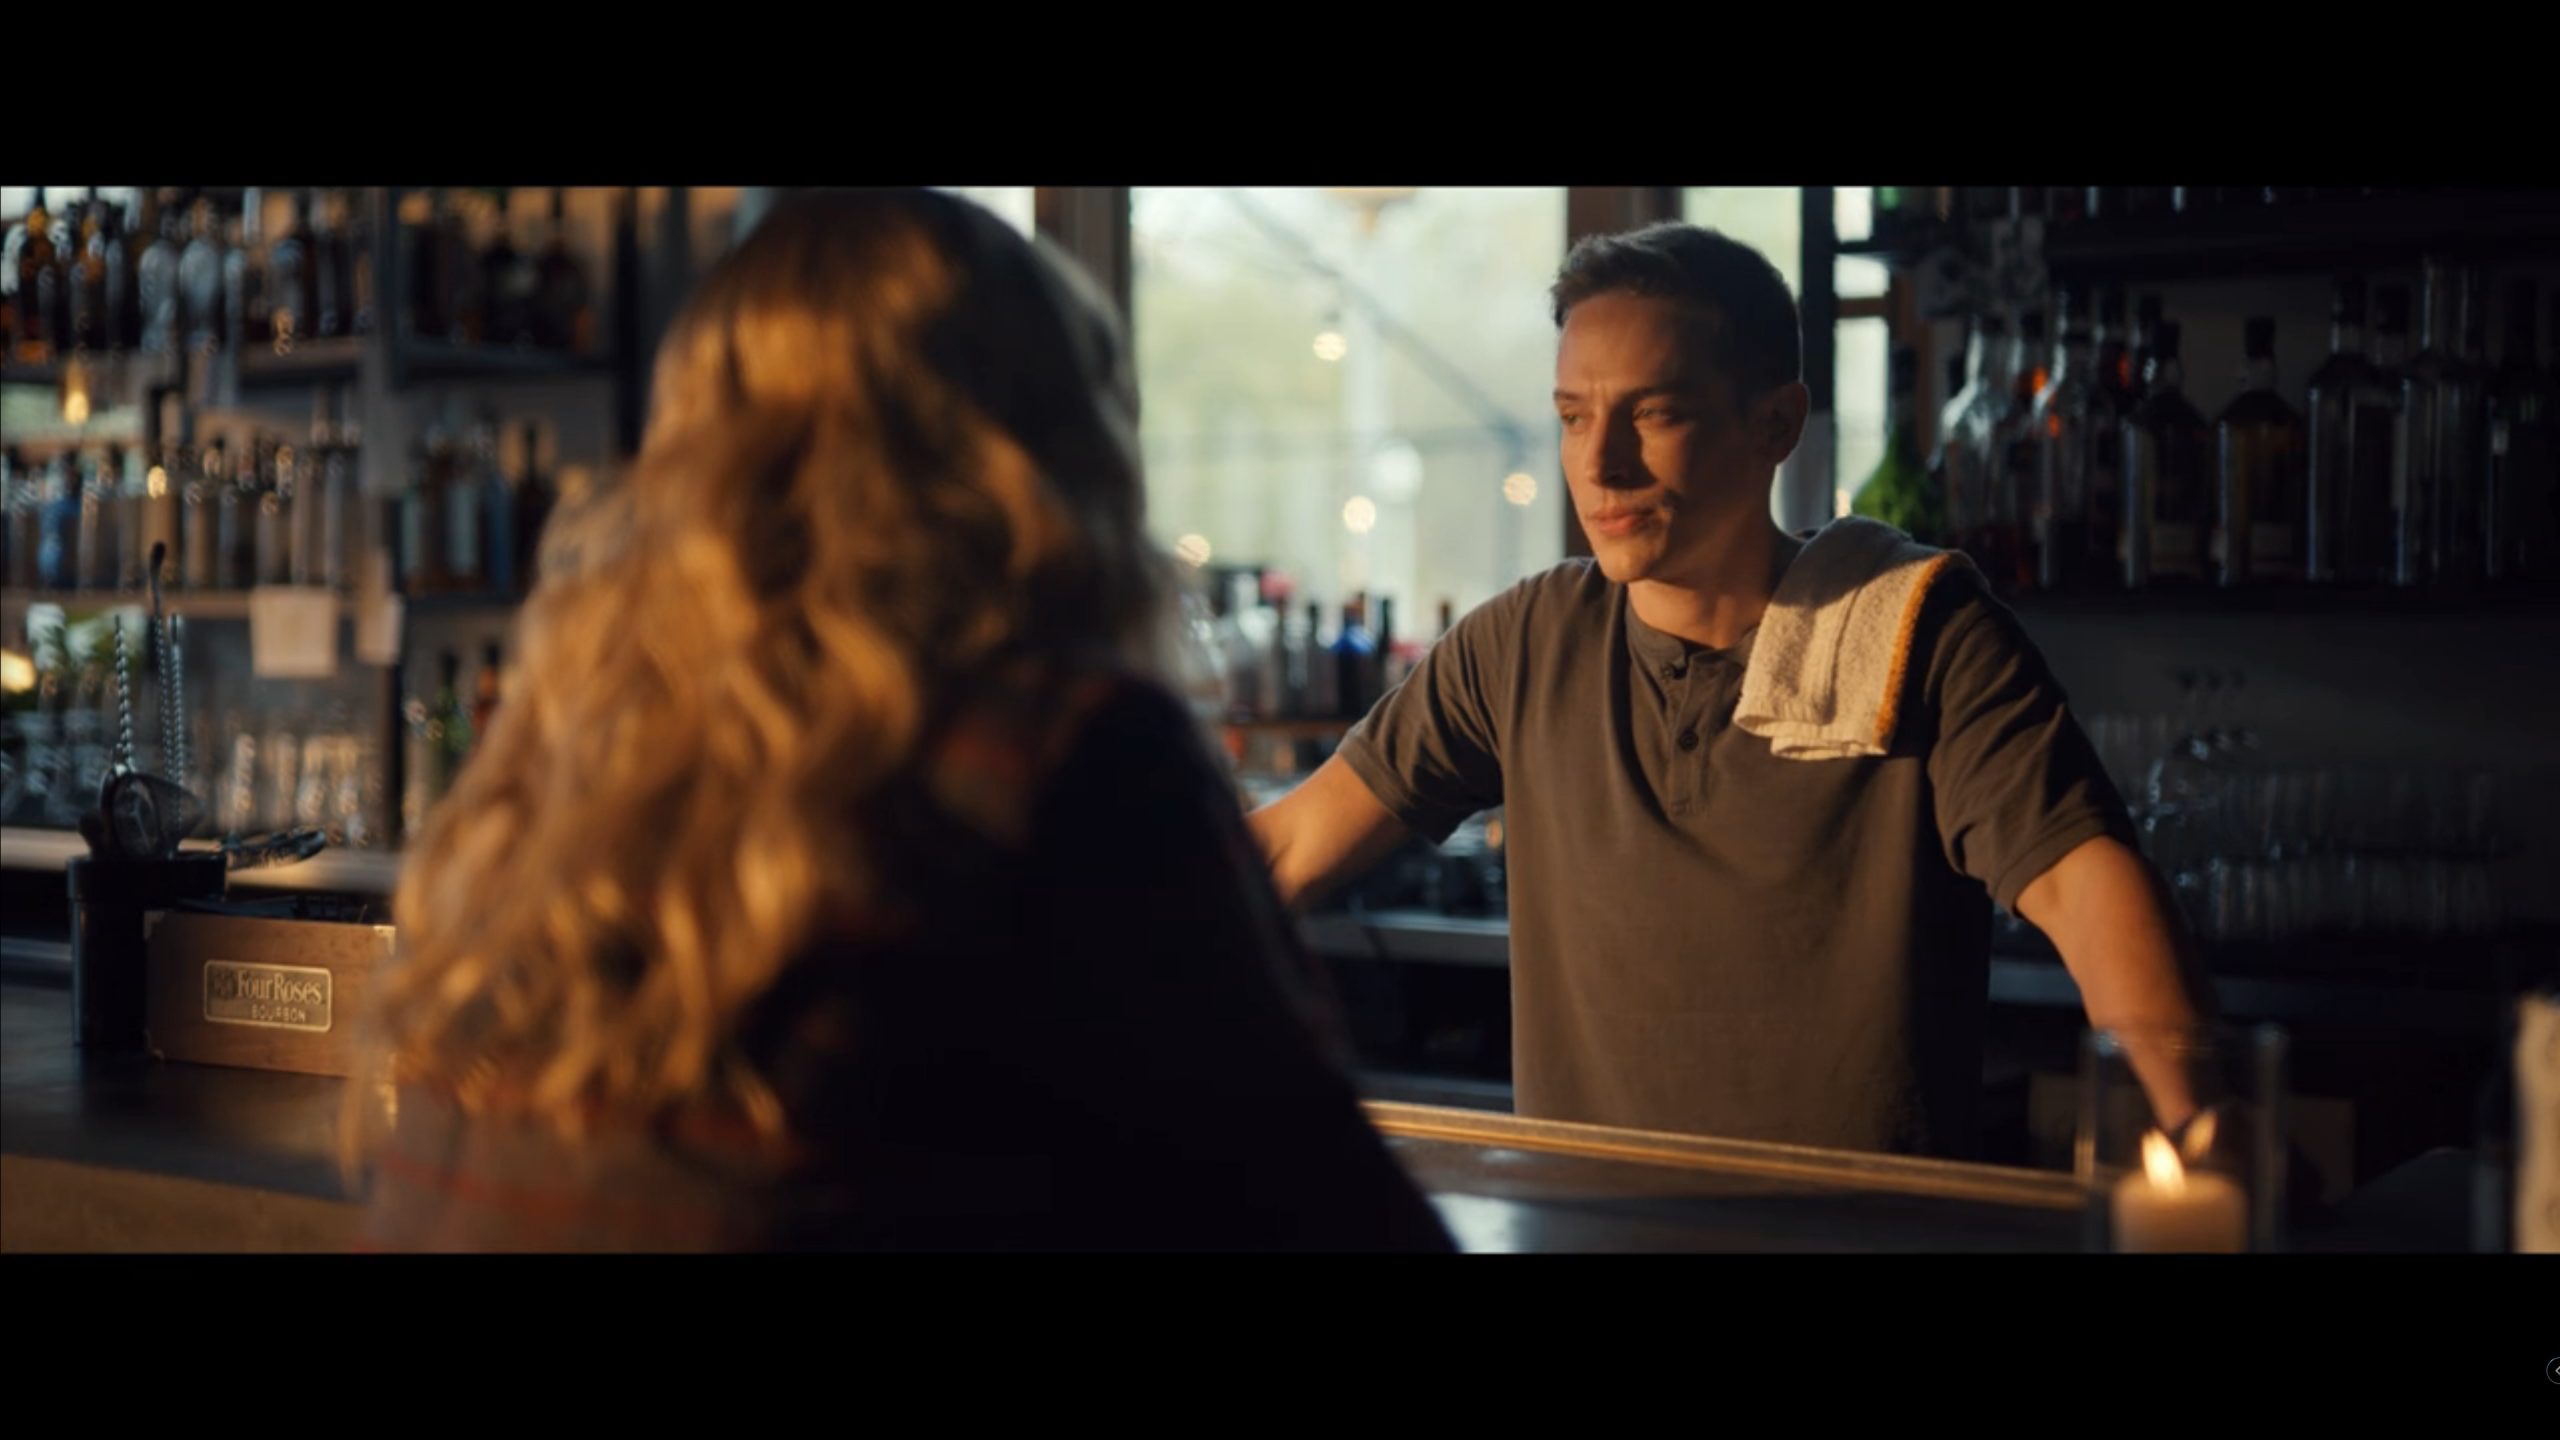 Max (Edmund Donovan) at his family's bar talking to Lucy